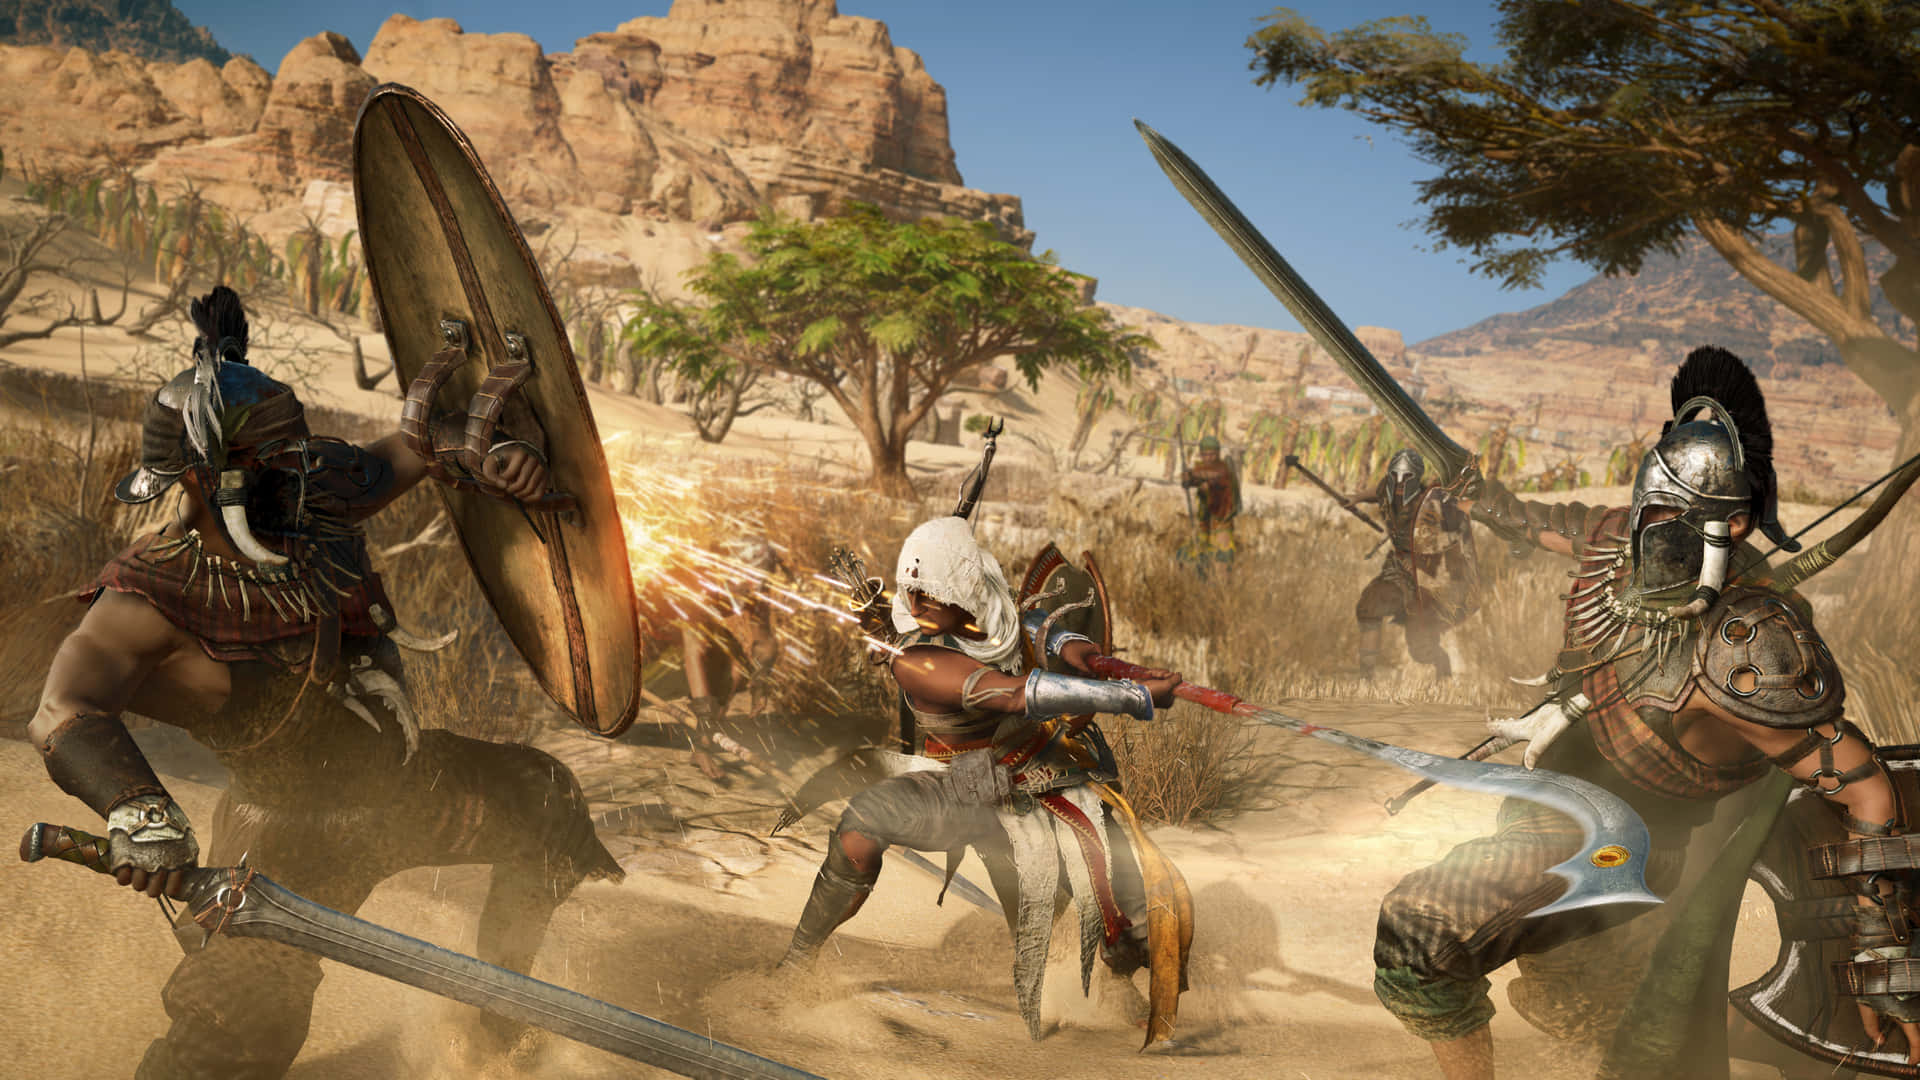 Screenshotvon Assassin's Creed Iii